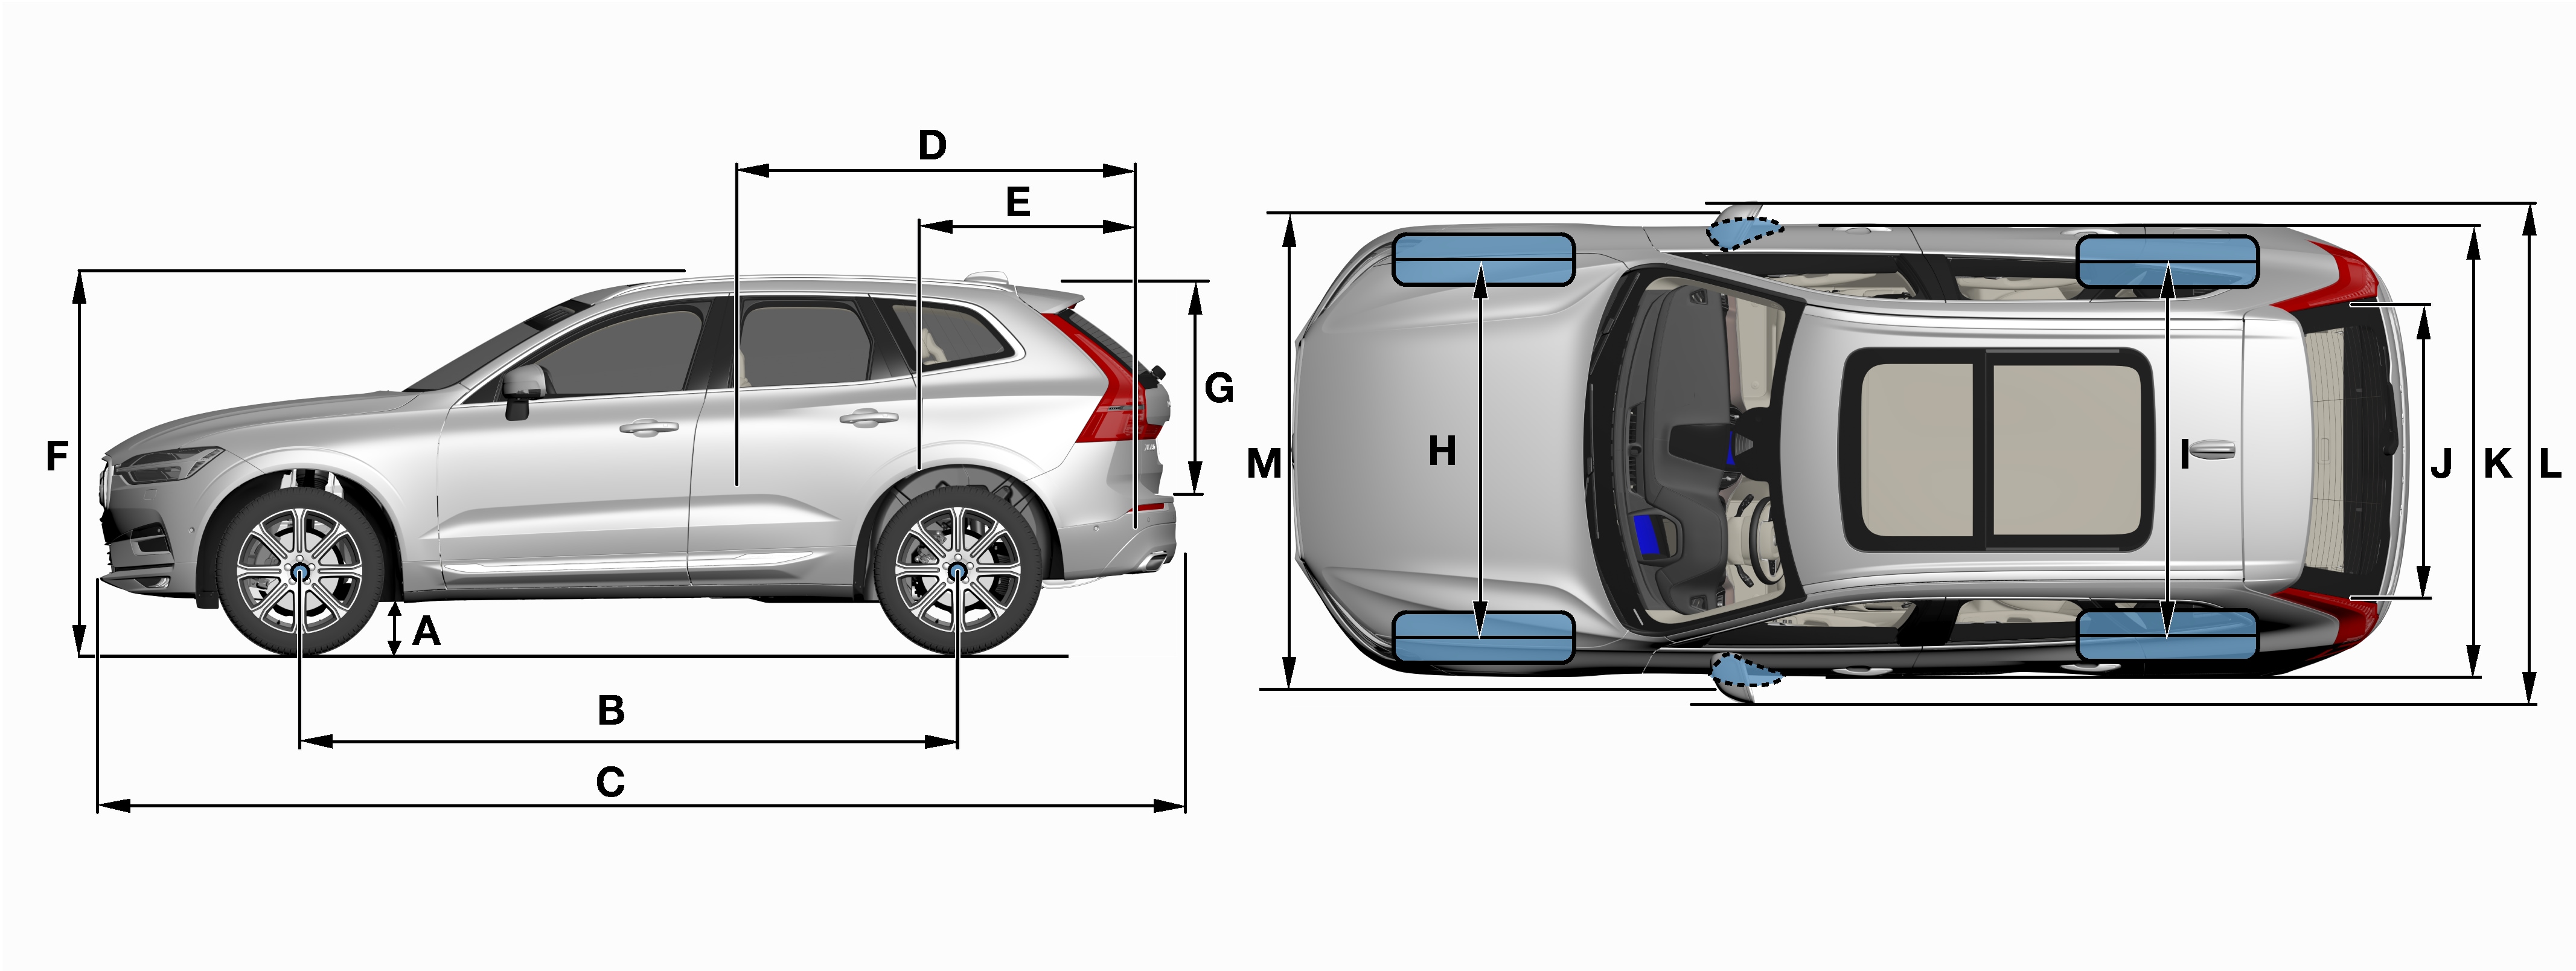 Interior Dimensions Volvo Xc60